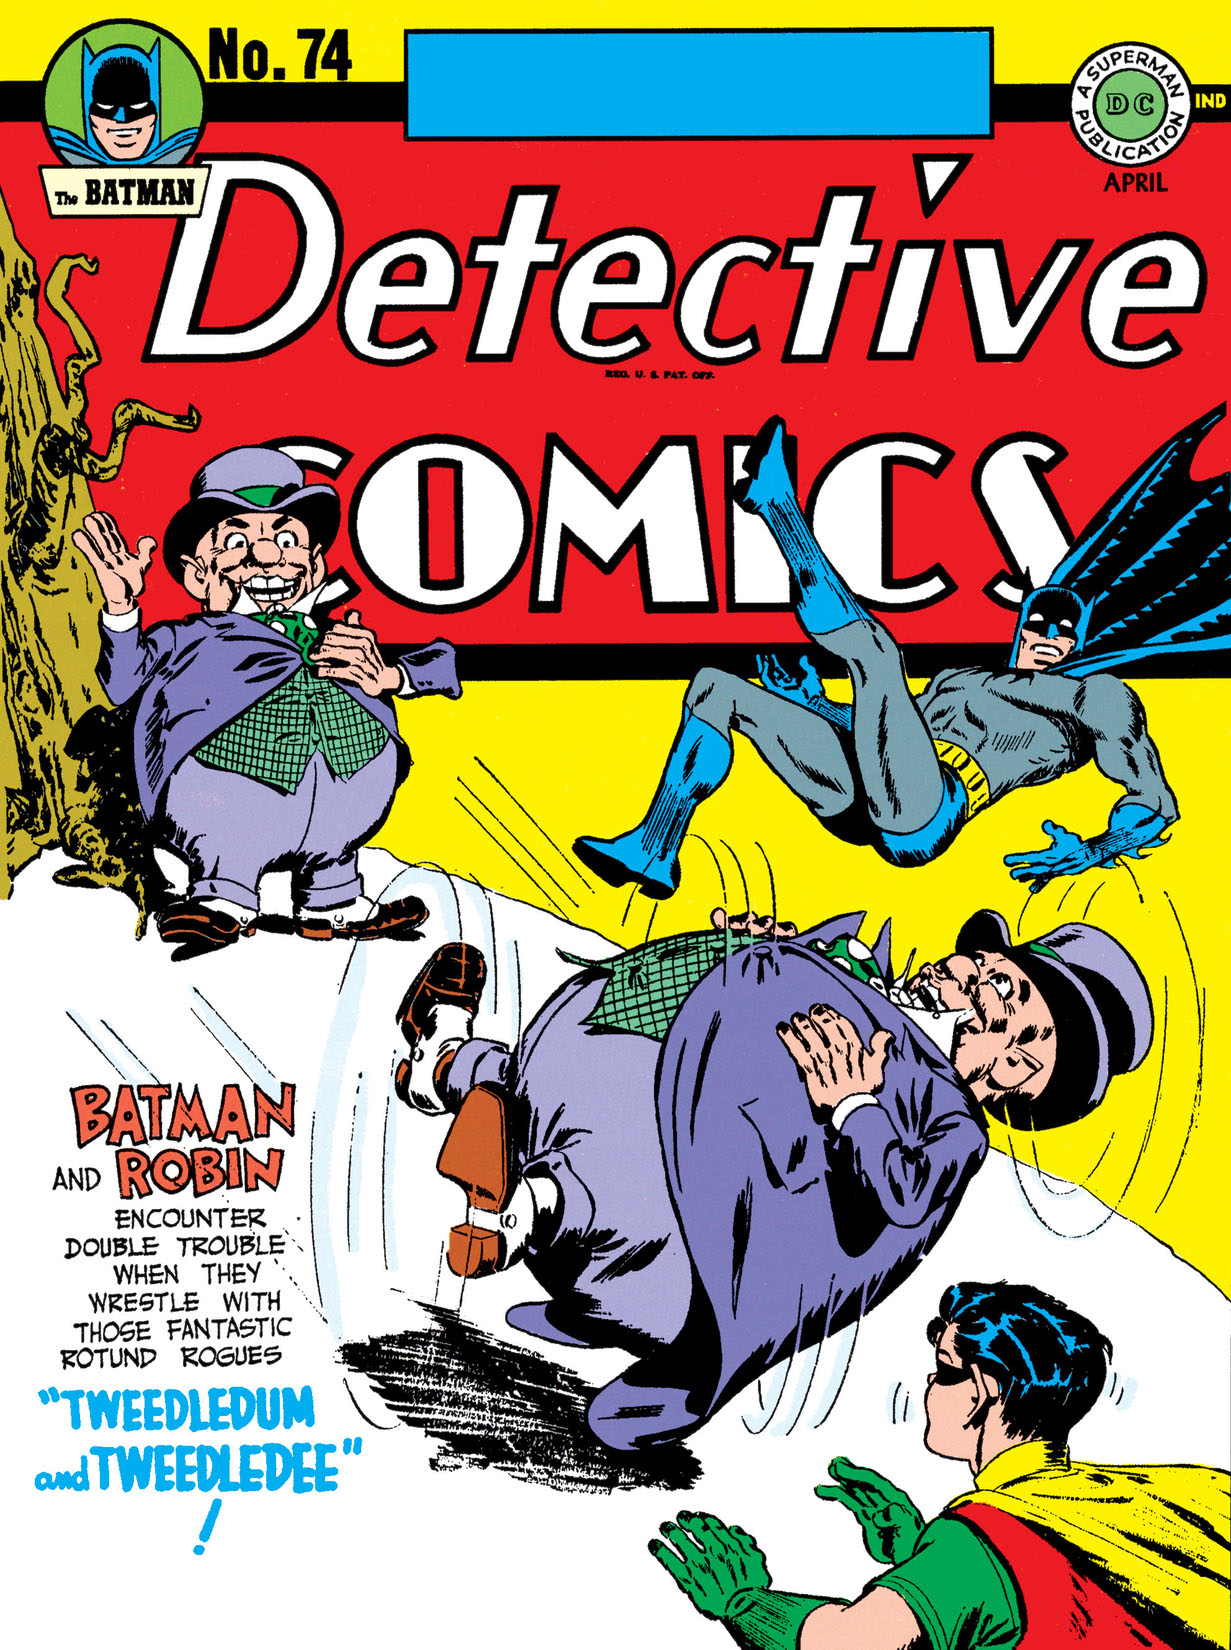 Detective Comics (1942-) #74 preview images